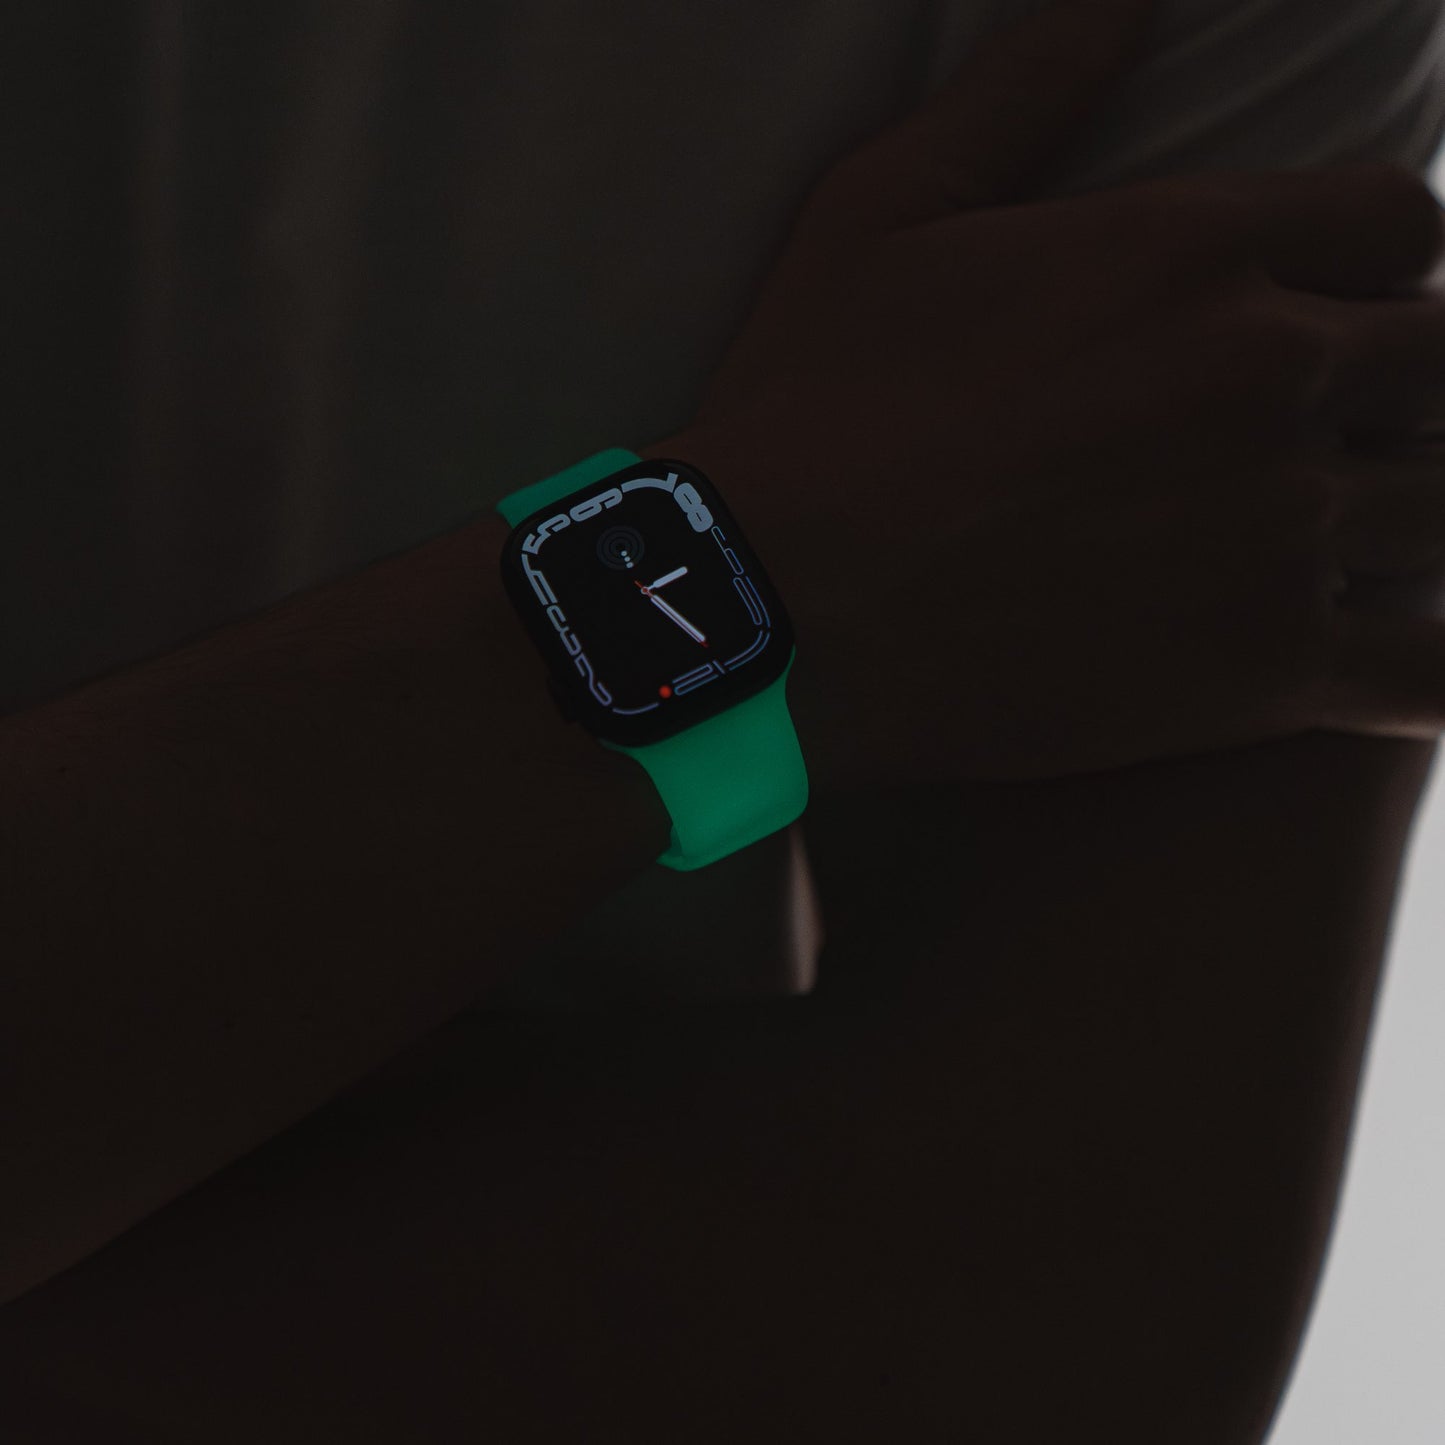 arktisband Apple Watch Silikonarmband Glow in the Dark